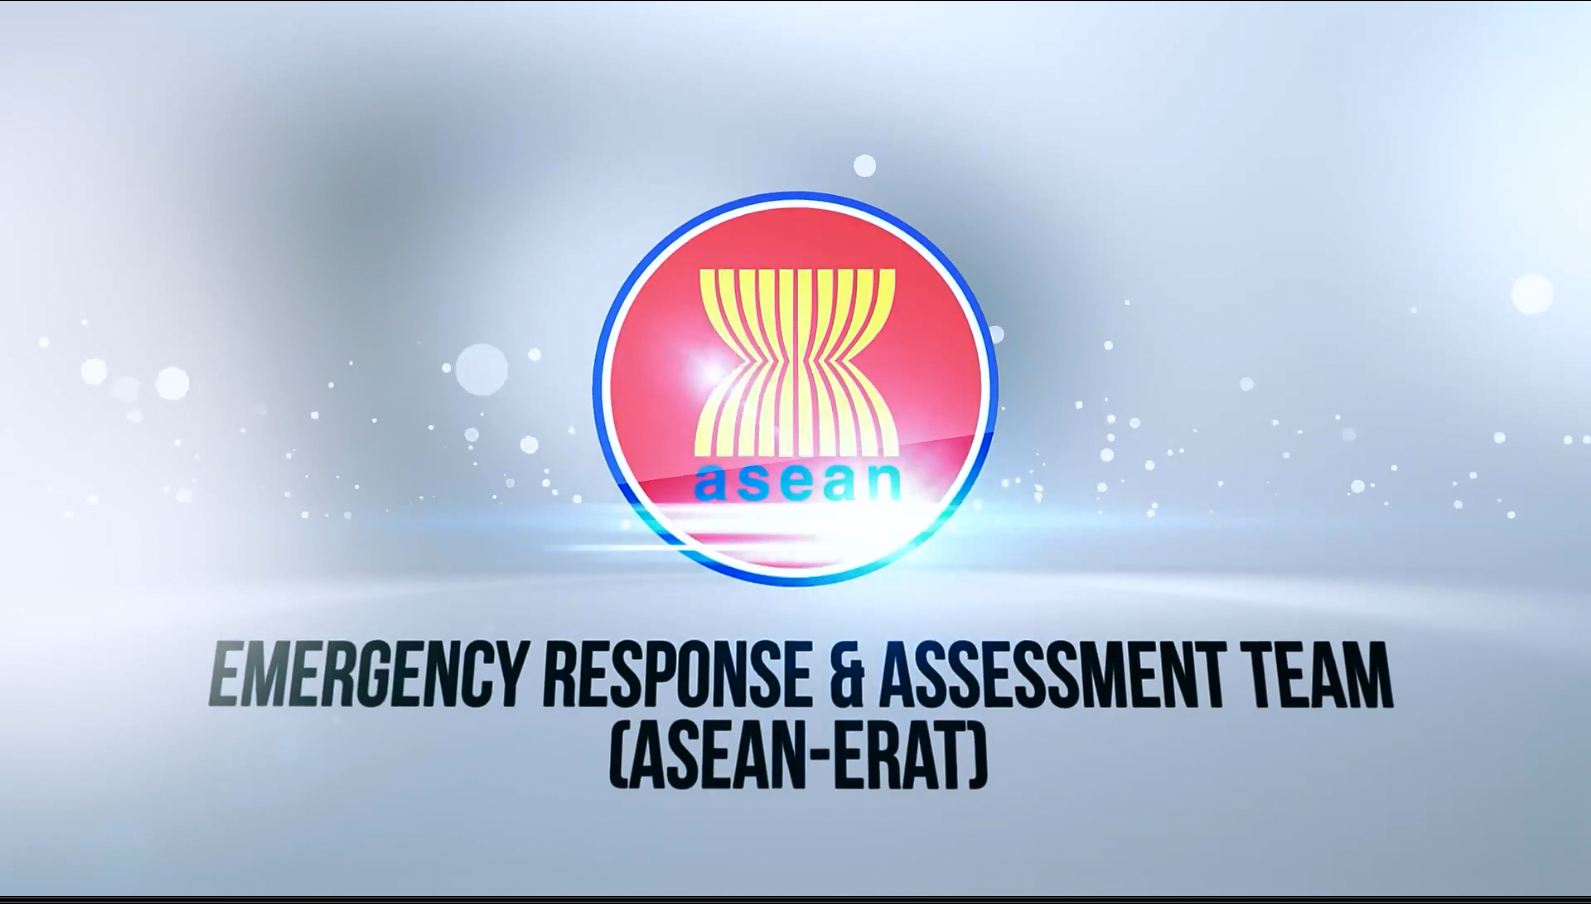 ASEAN-ERAT video from Youtube - ASEAN